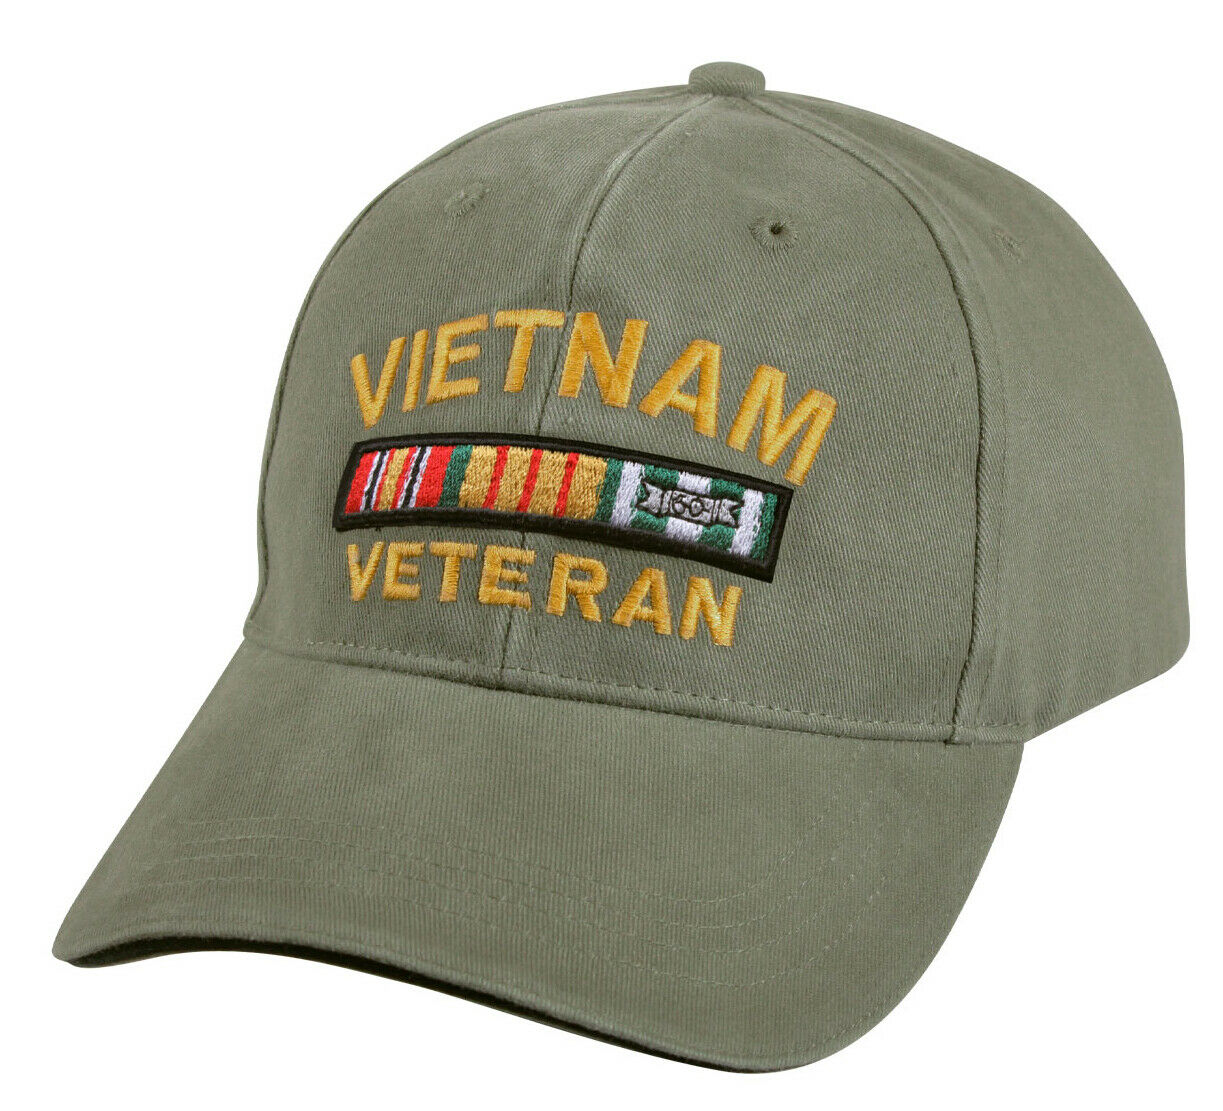 Rothco Vietnam Veteran Vintage Low Profile Insignia Cap